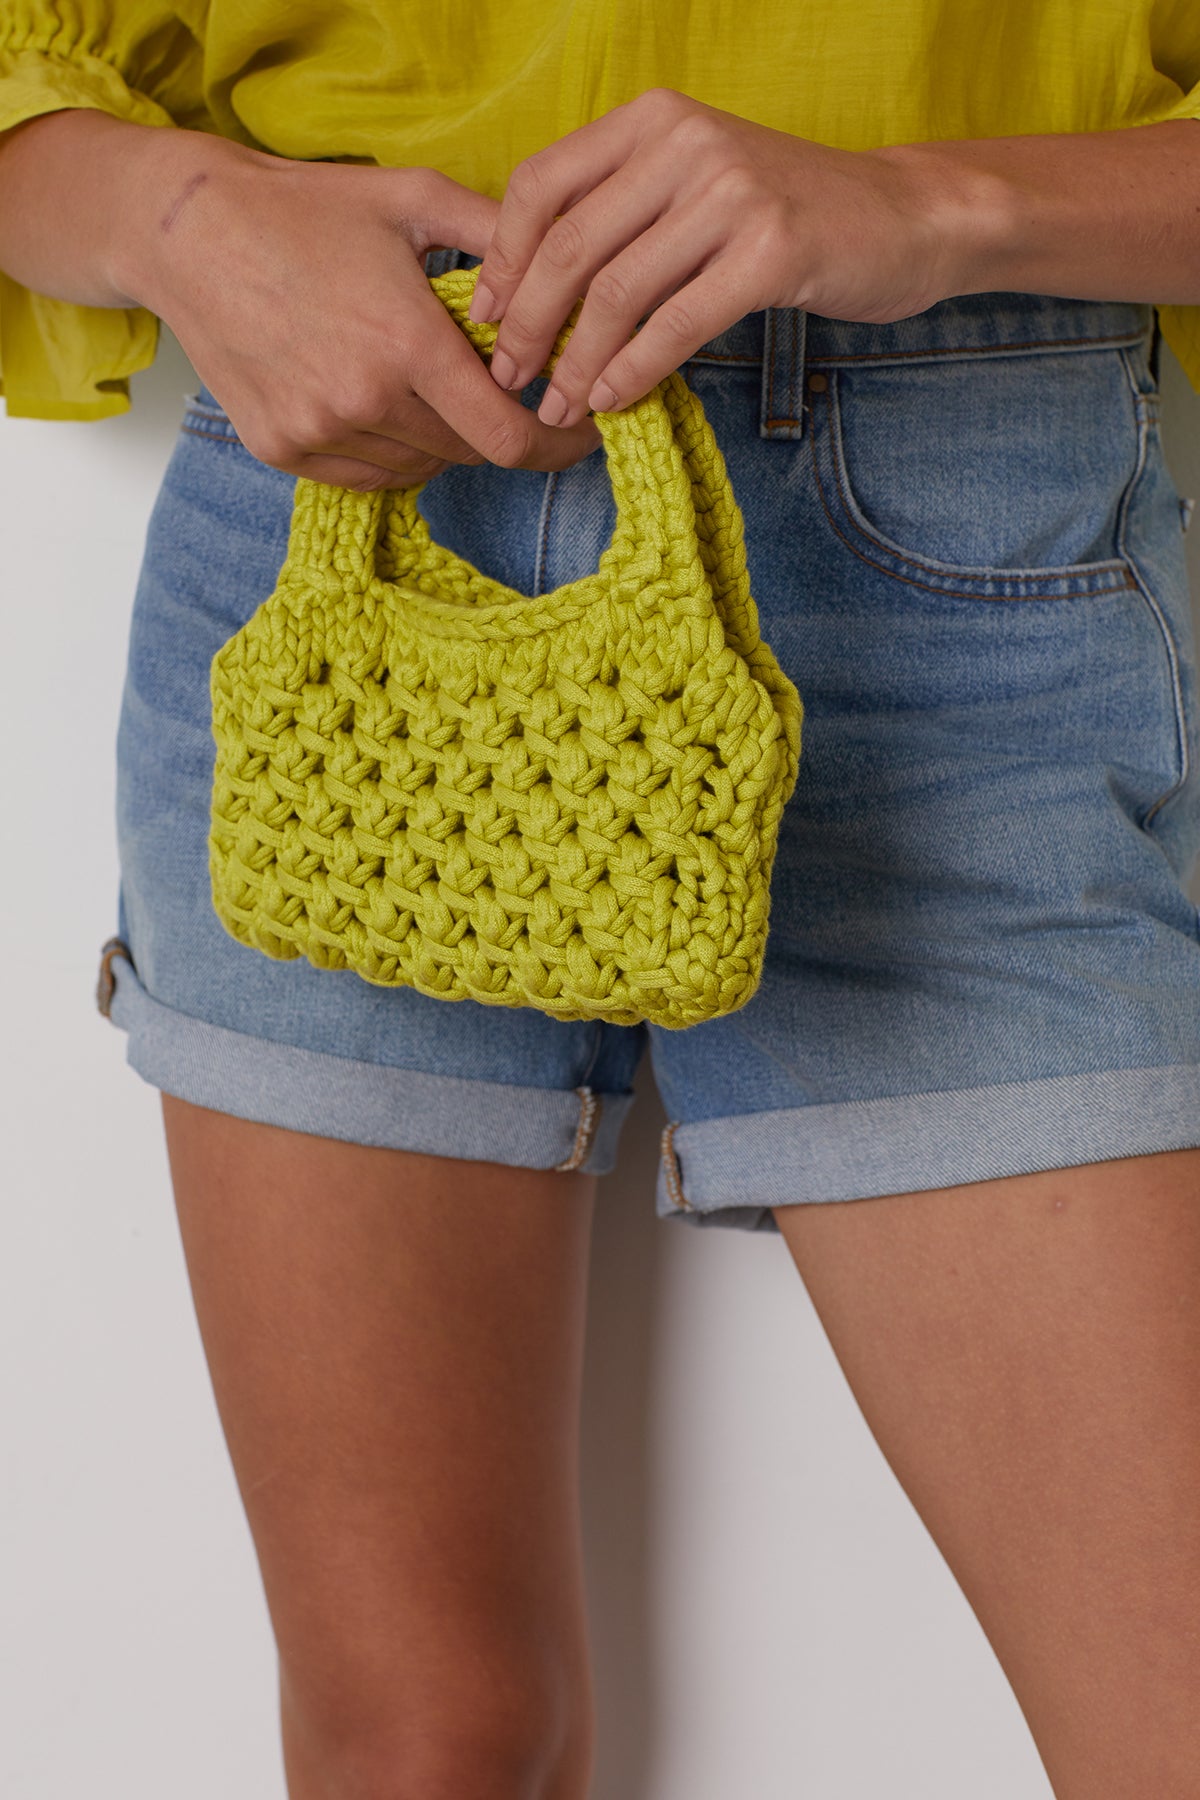   Bennie Crochet Bag in Lime with Natalie Denim  Shorts 